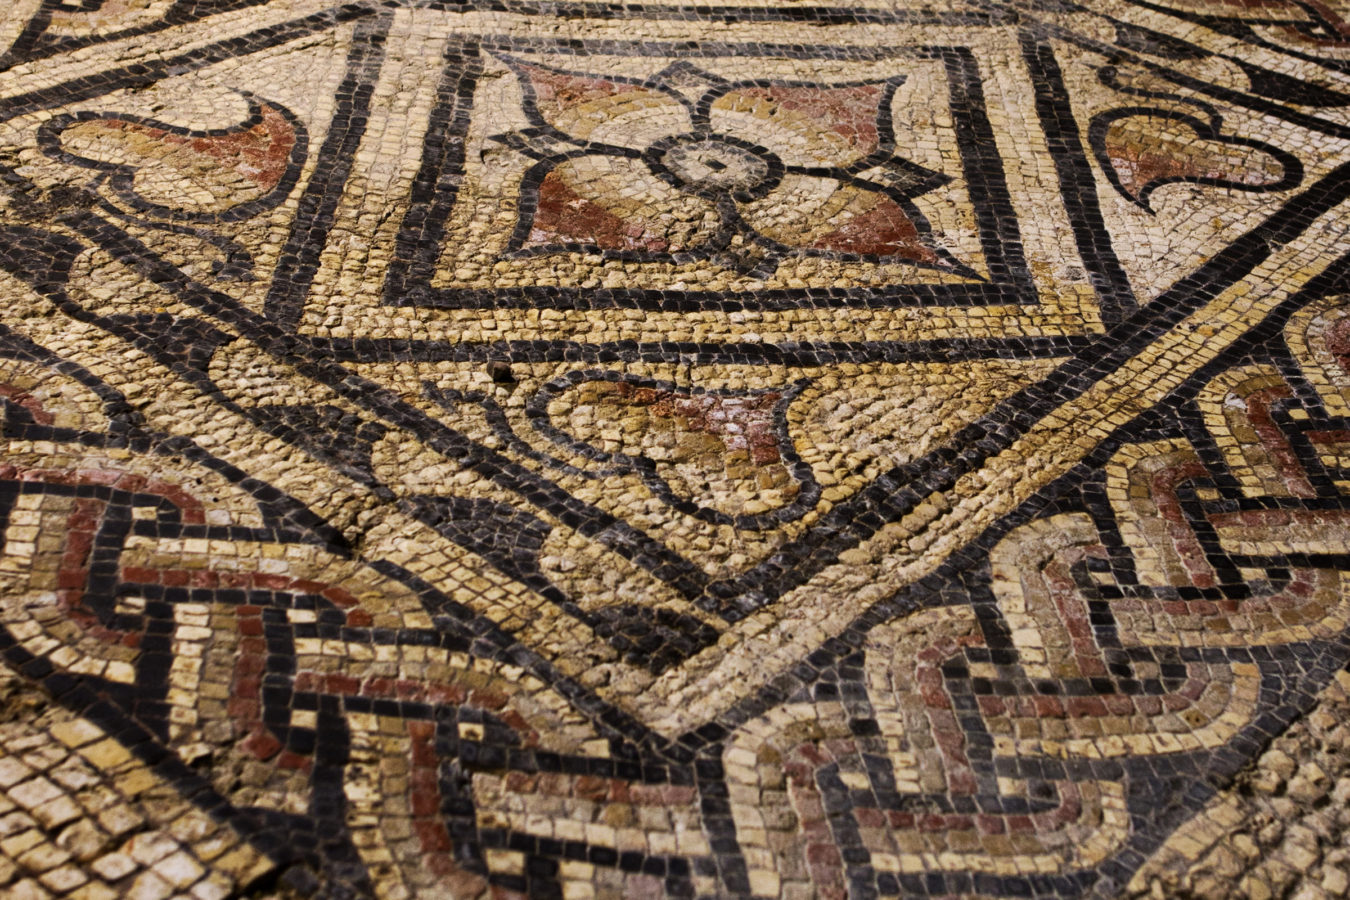 Canterbury Roman Museum mosaic floor